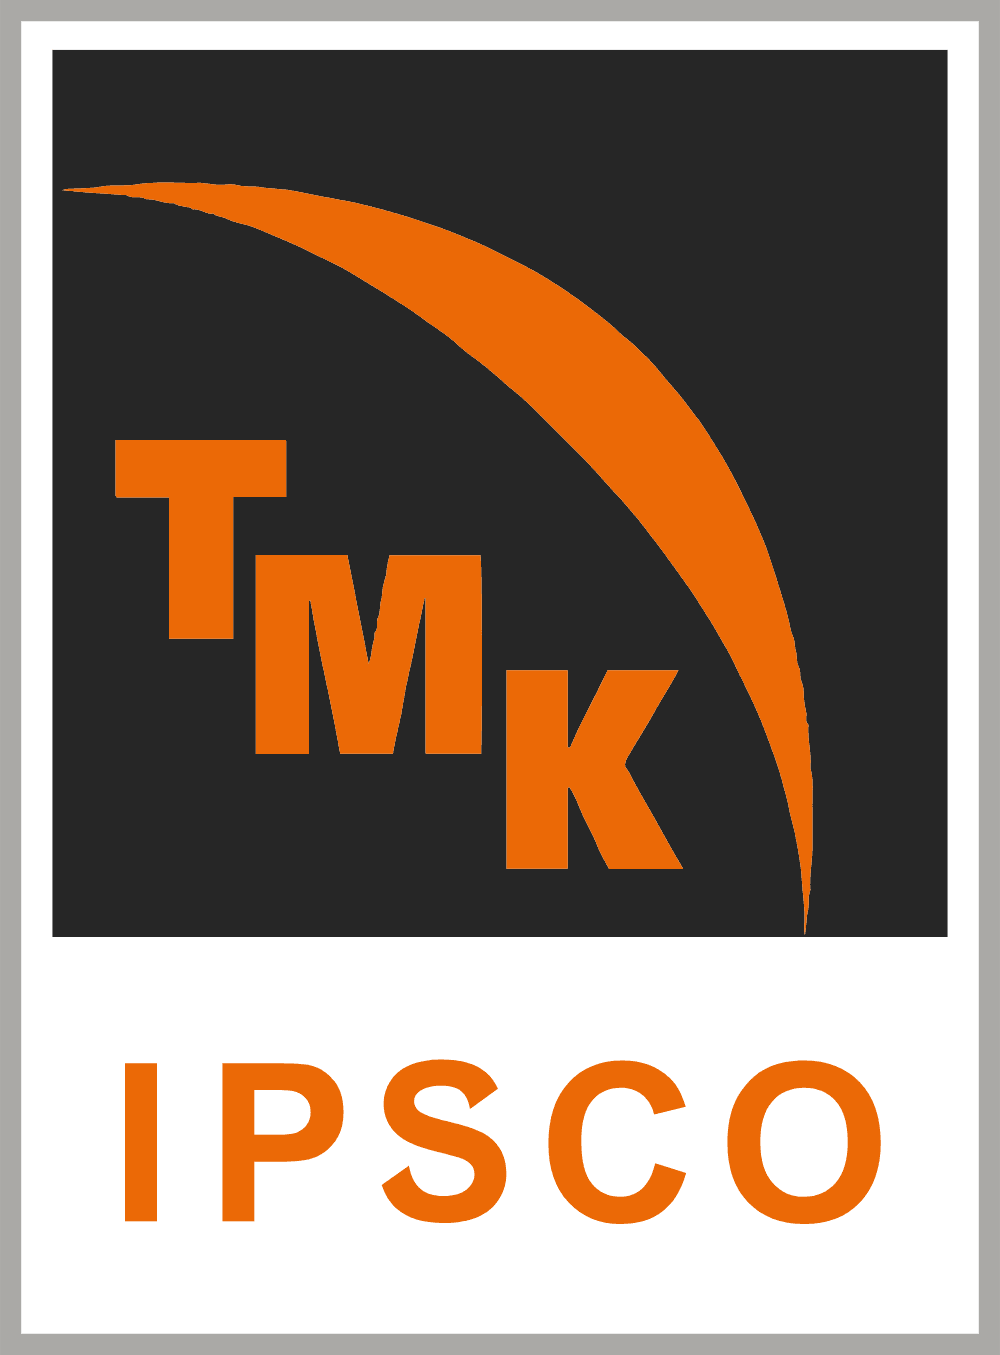 TMK IPSCO Logo download